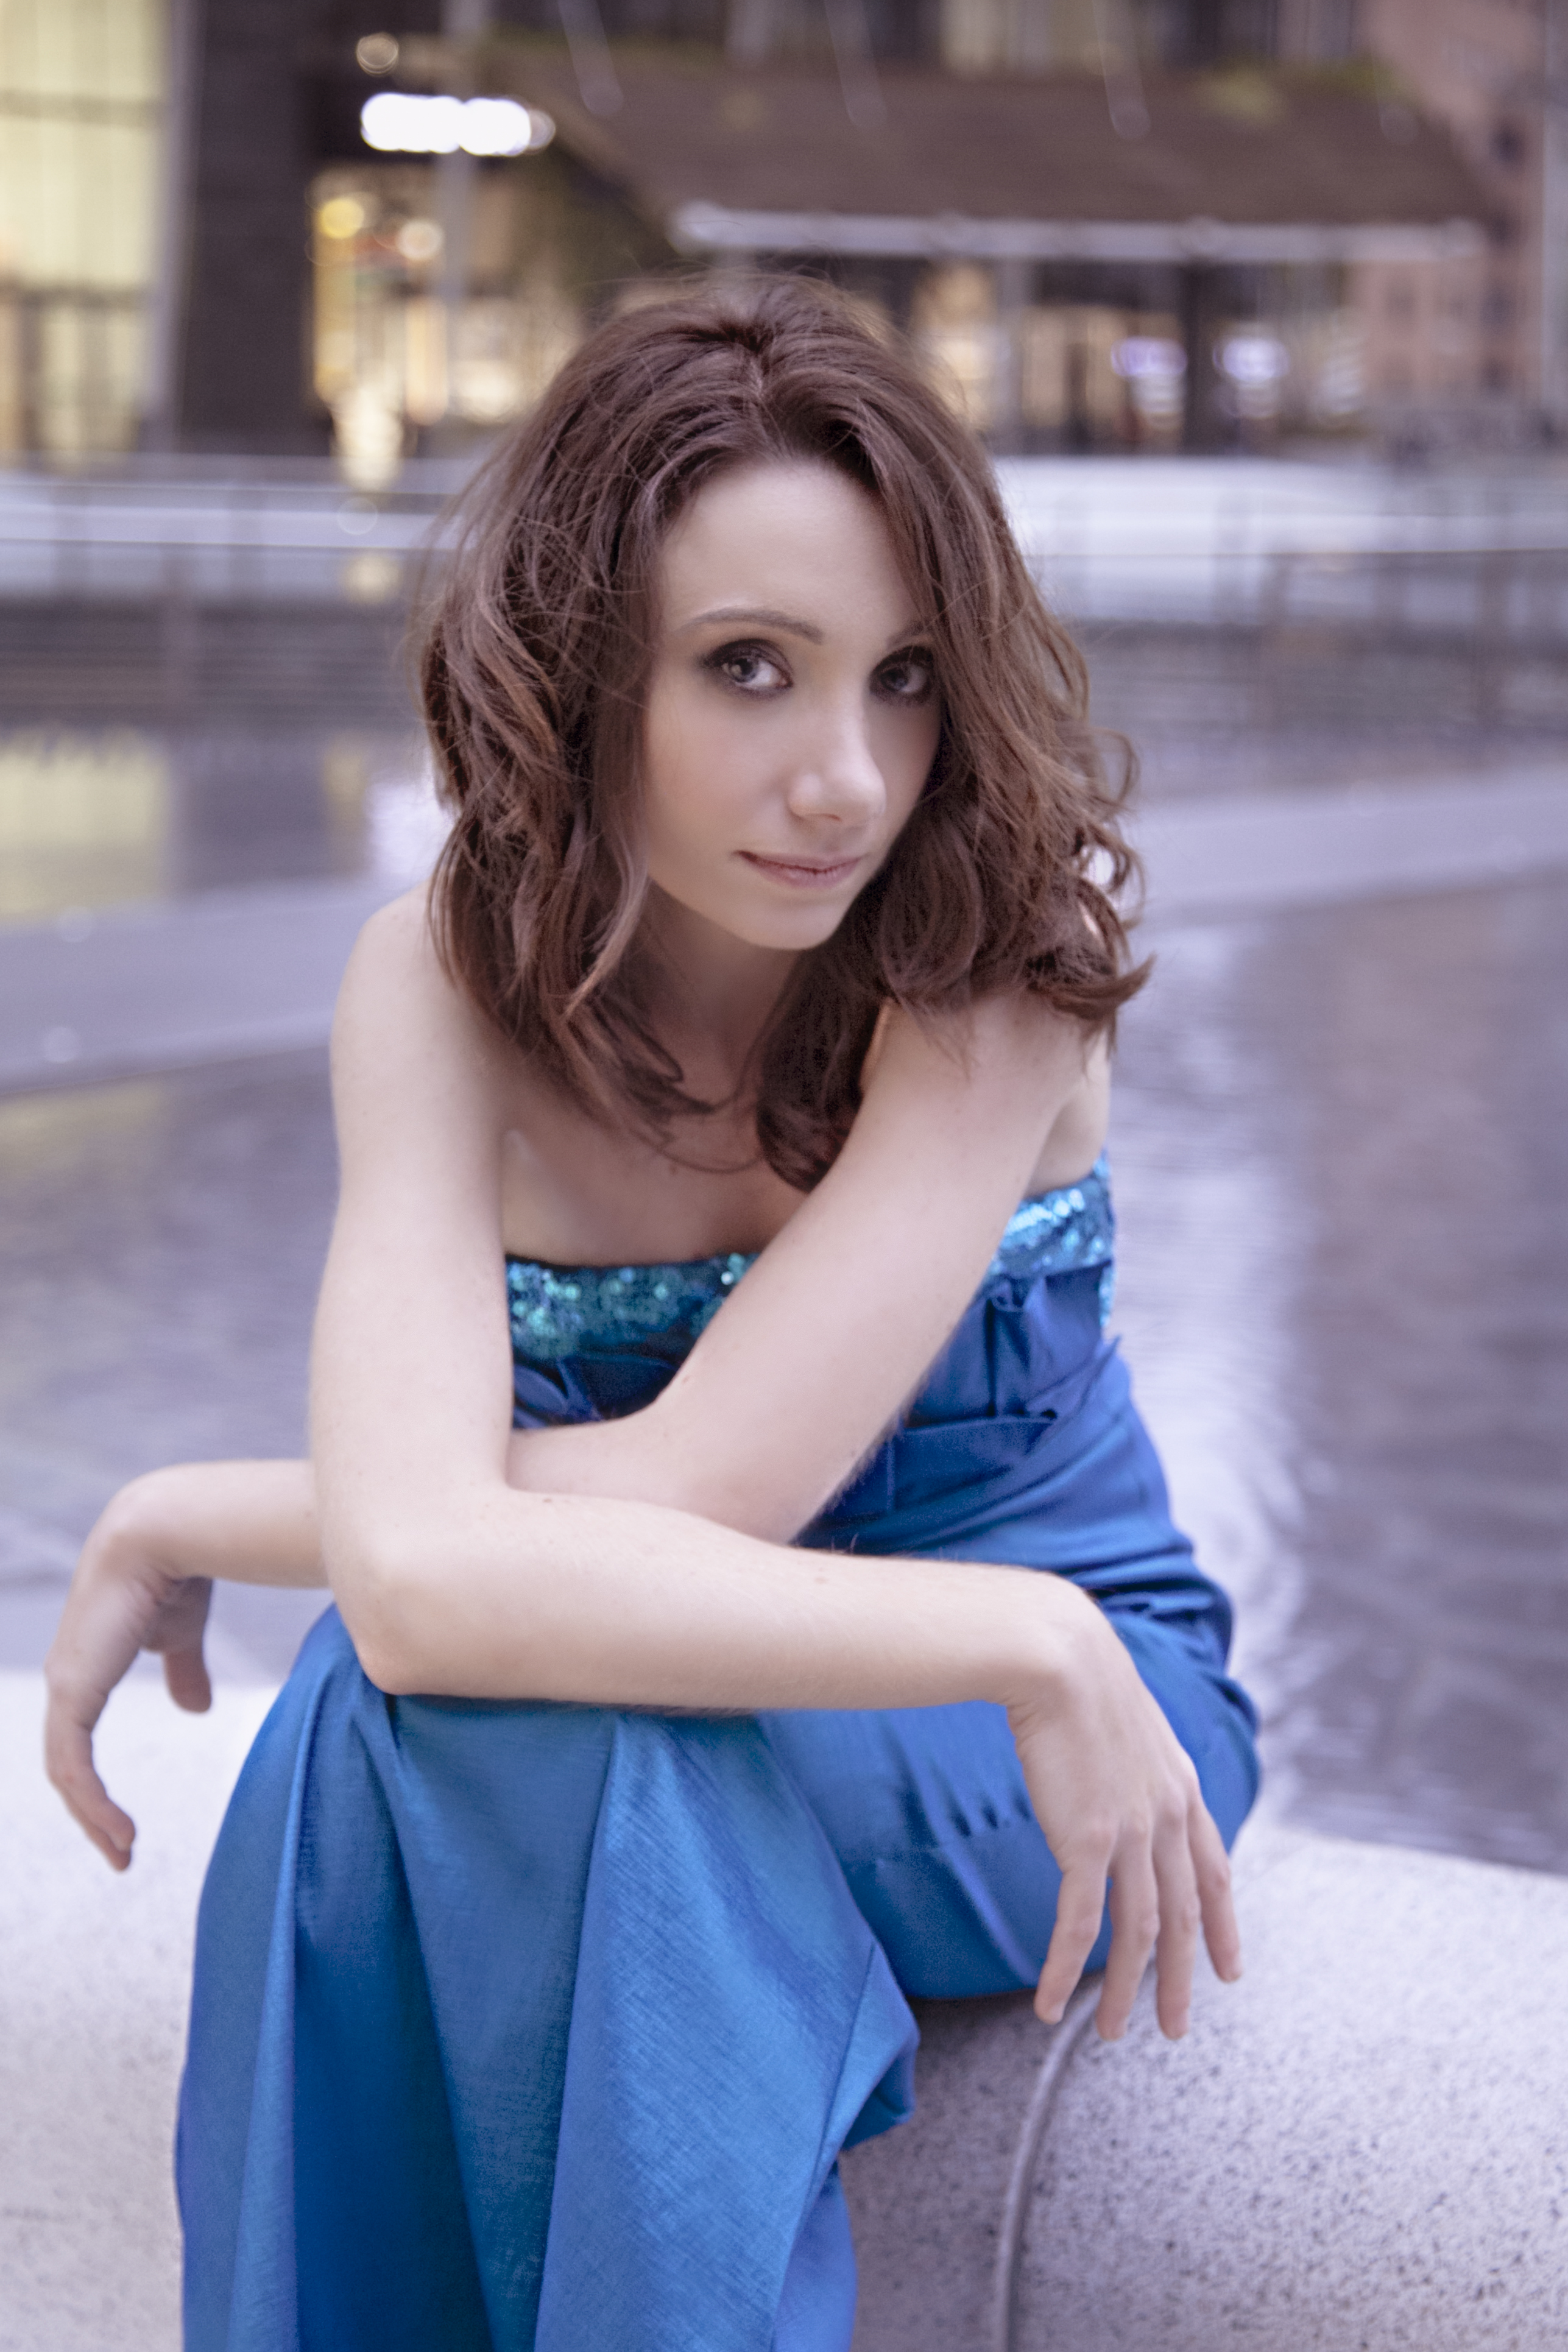 Elisa D'Auria, pianist